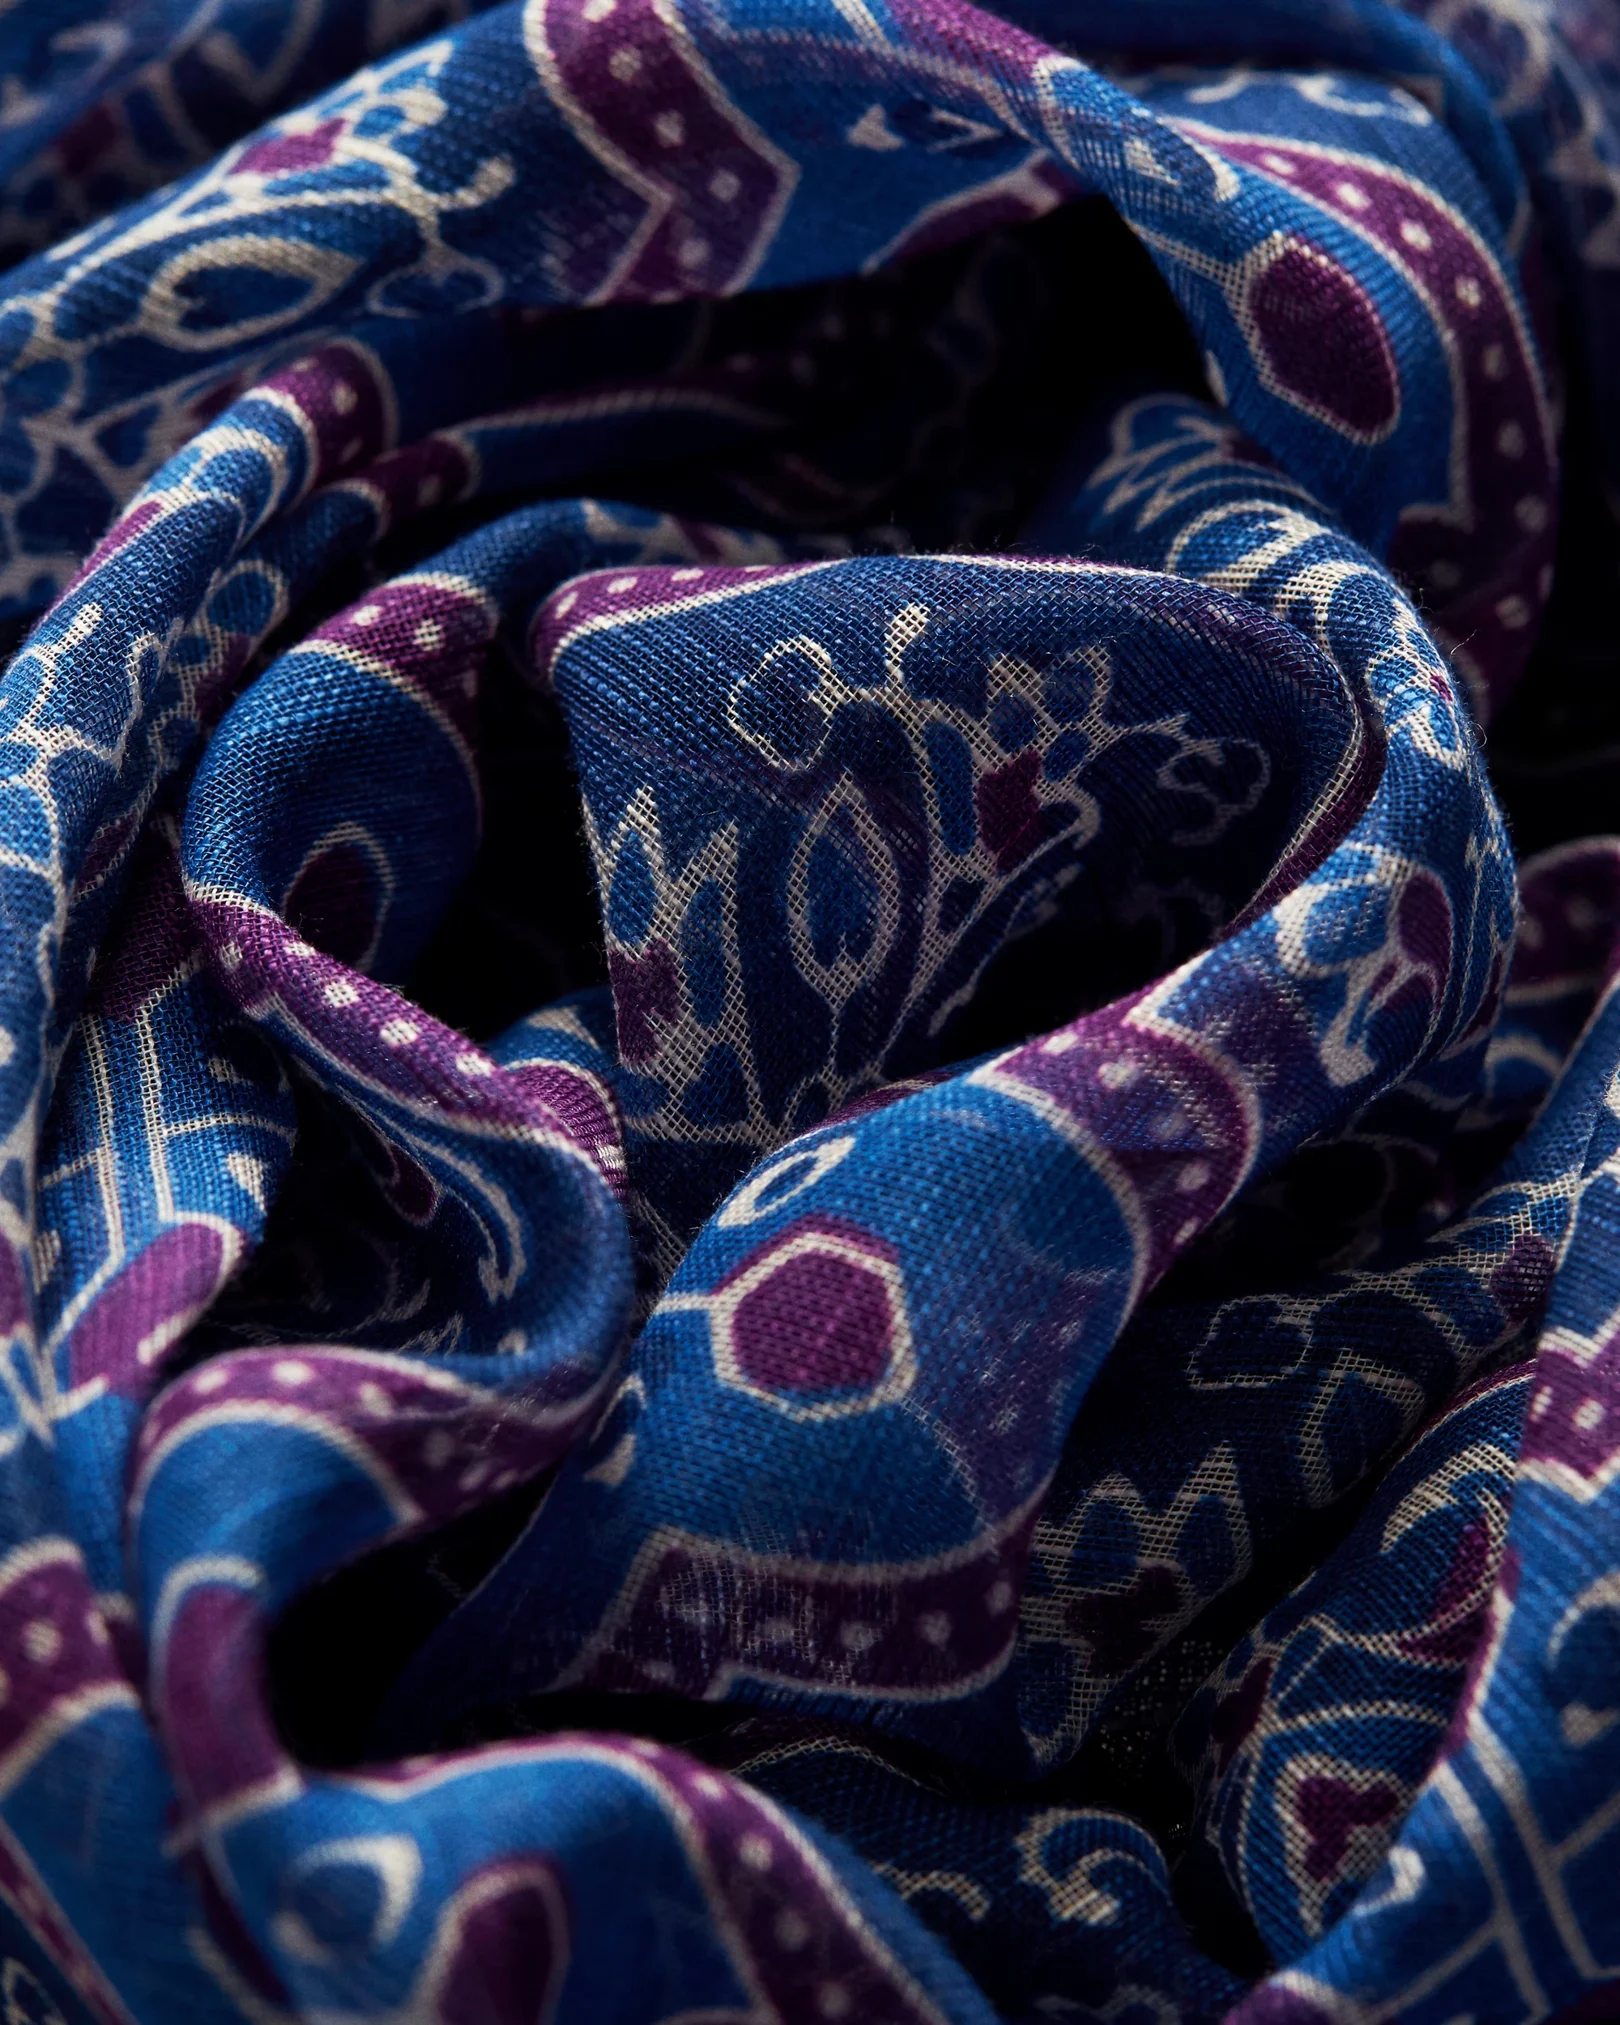 Eton - medallion foulard scarf